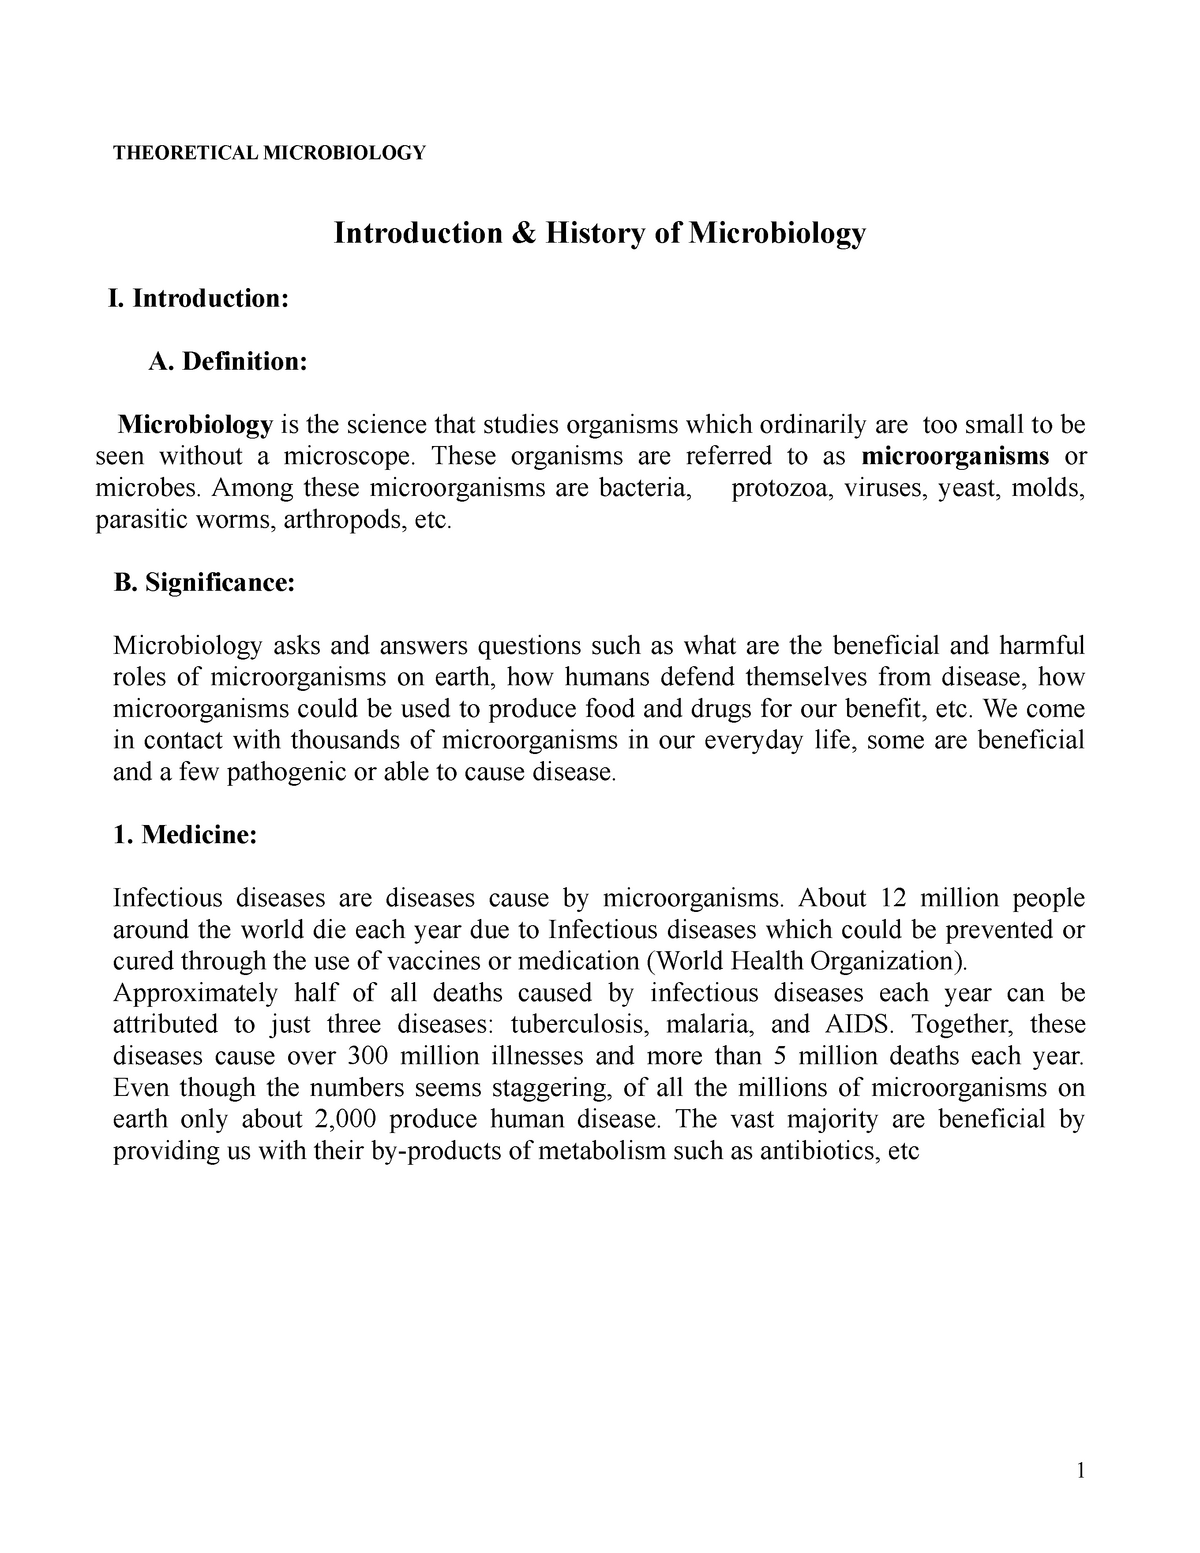 dissertation topics on microbiology